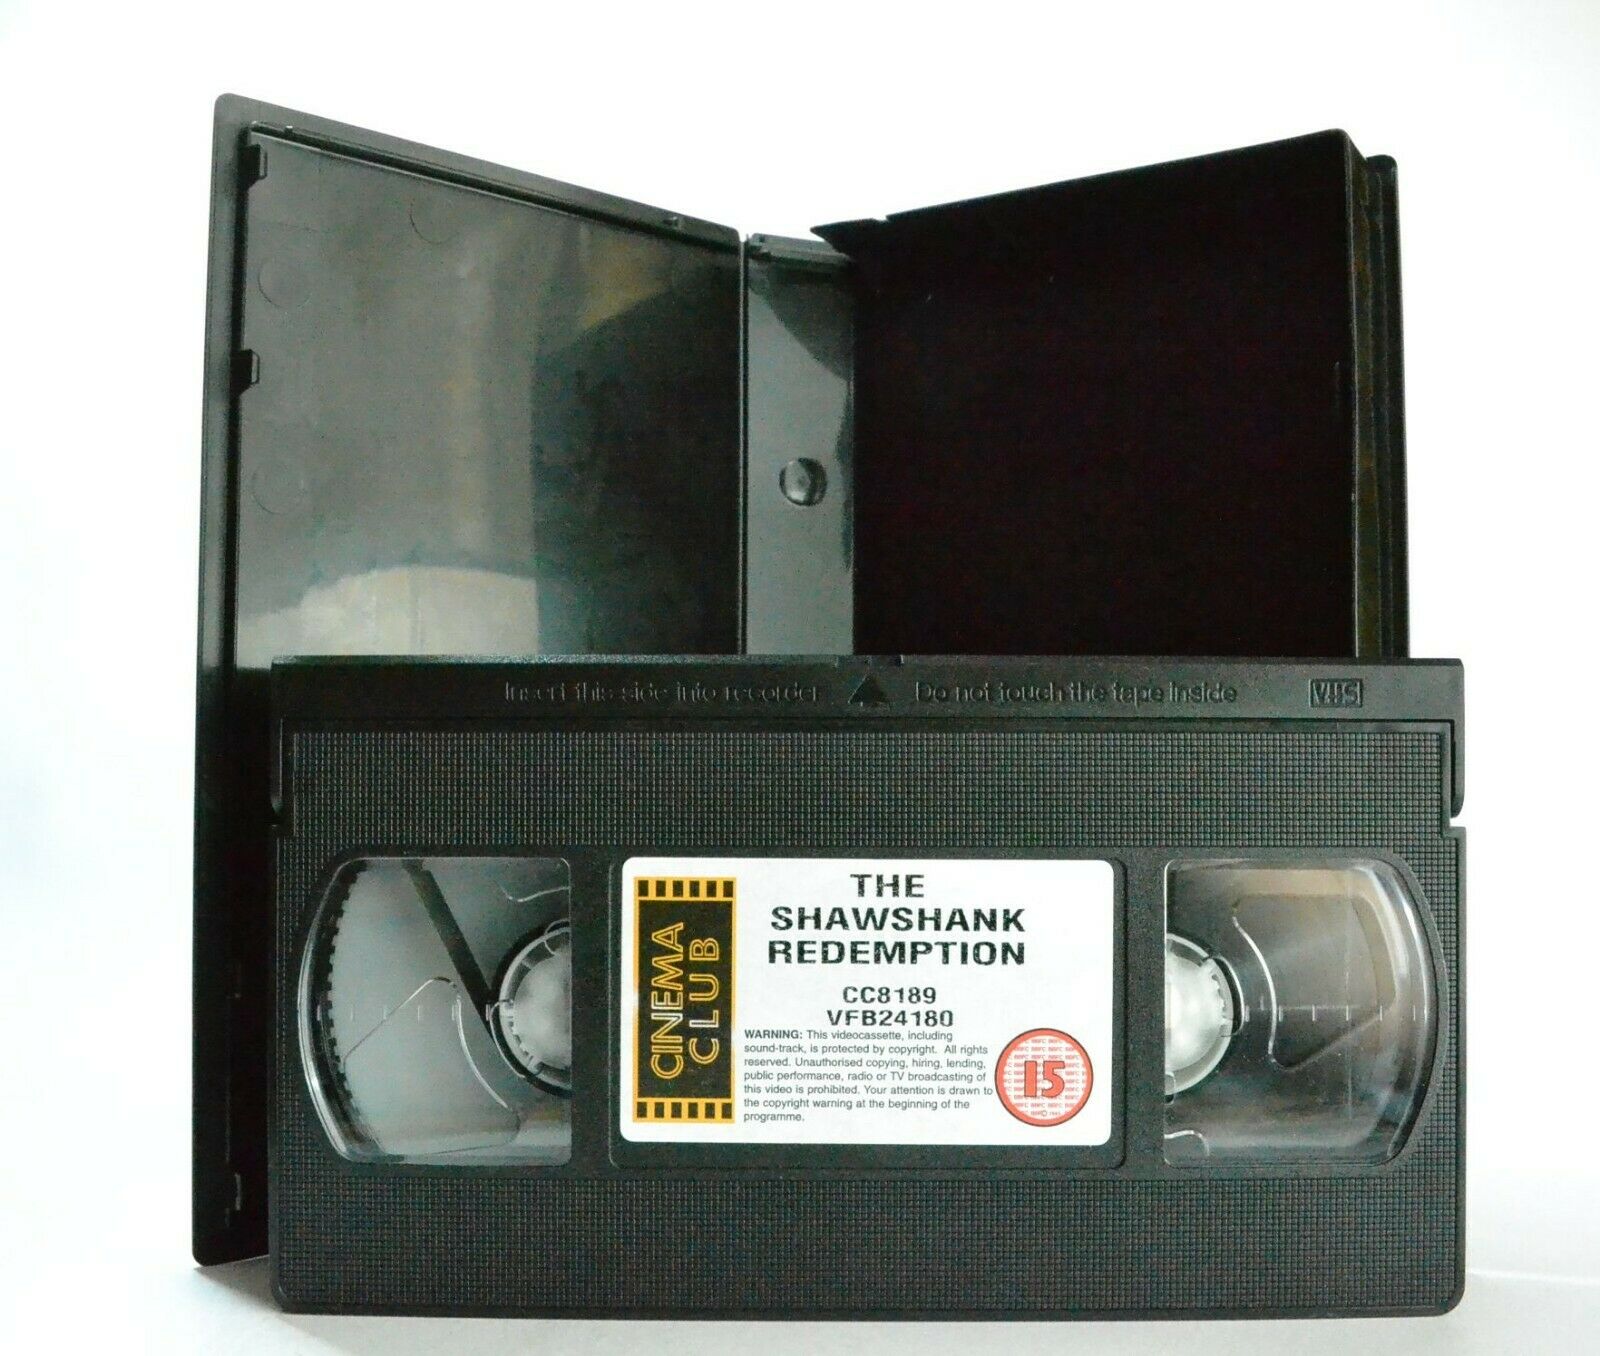 The Shawshank Redemption: Based On S.King Novel - Drama (1994) - T.Robbins - VHS-